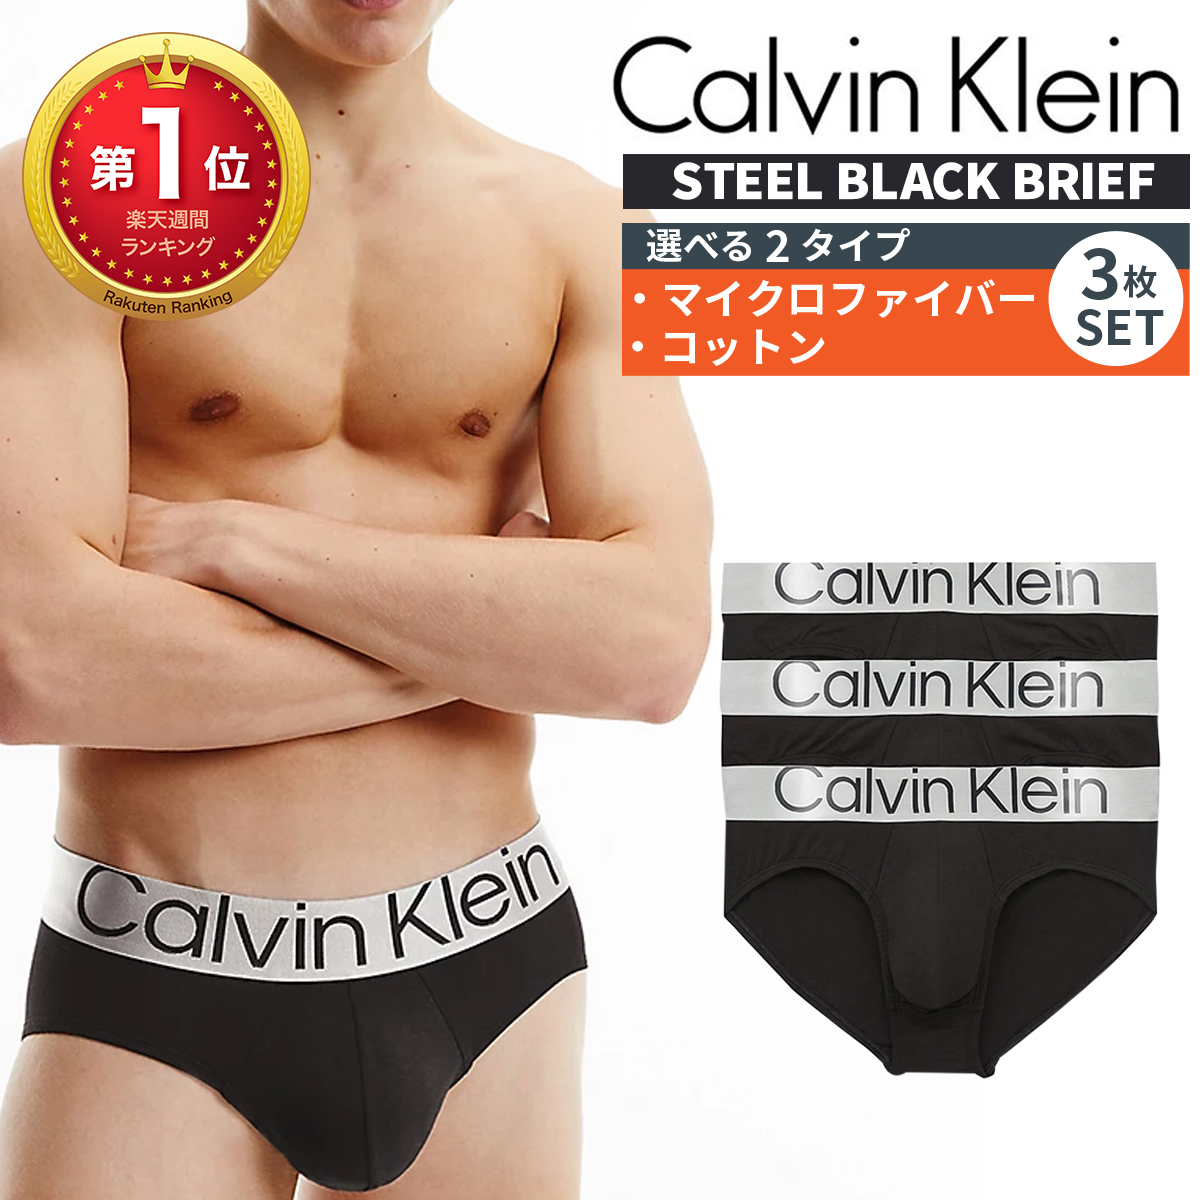  Calvin Klein 3枚セット 2タイプ ブリーフ メンズ コットン マイクロファイバー カッコイイ オシャレ おしゃれ 並行輸入品